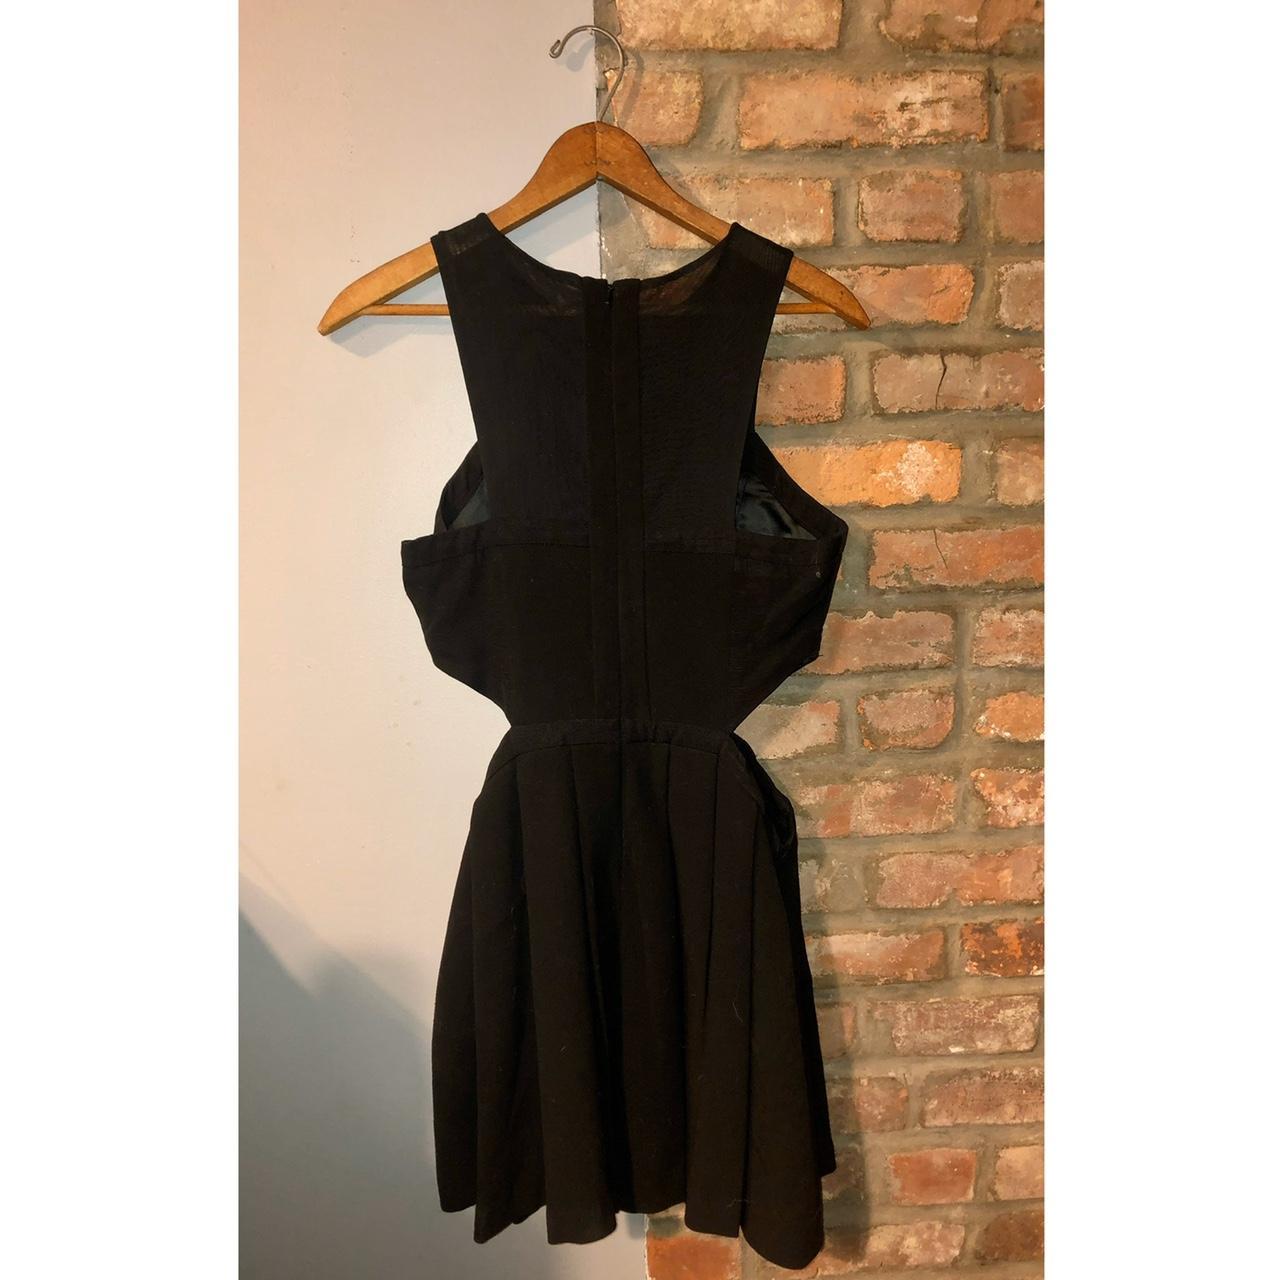 Product Image 2 - Black cut out dress
Sheer v